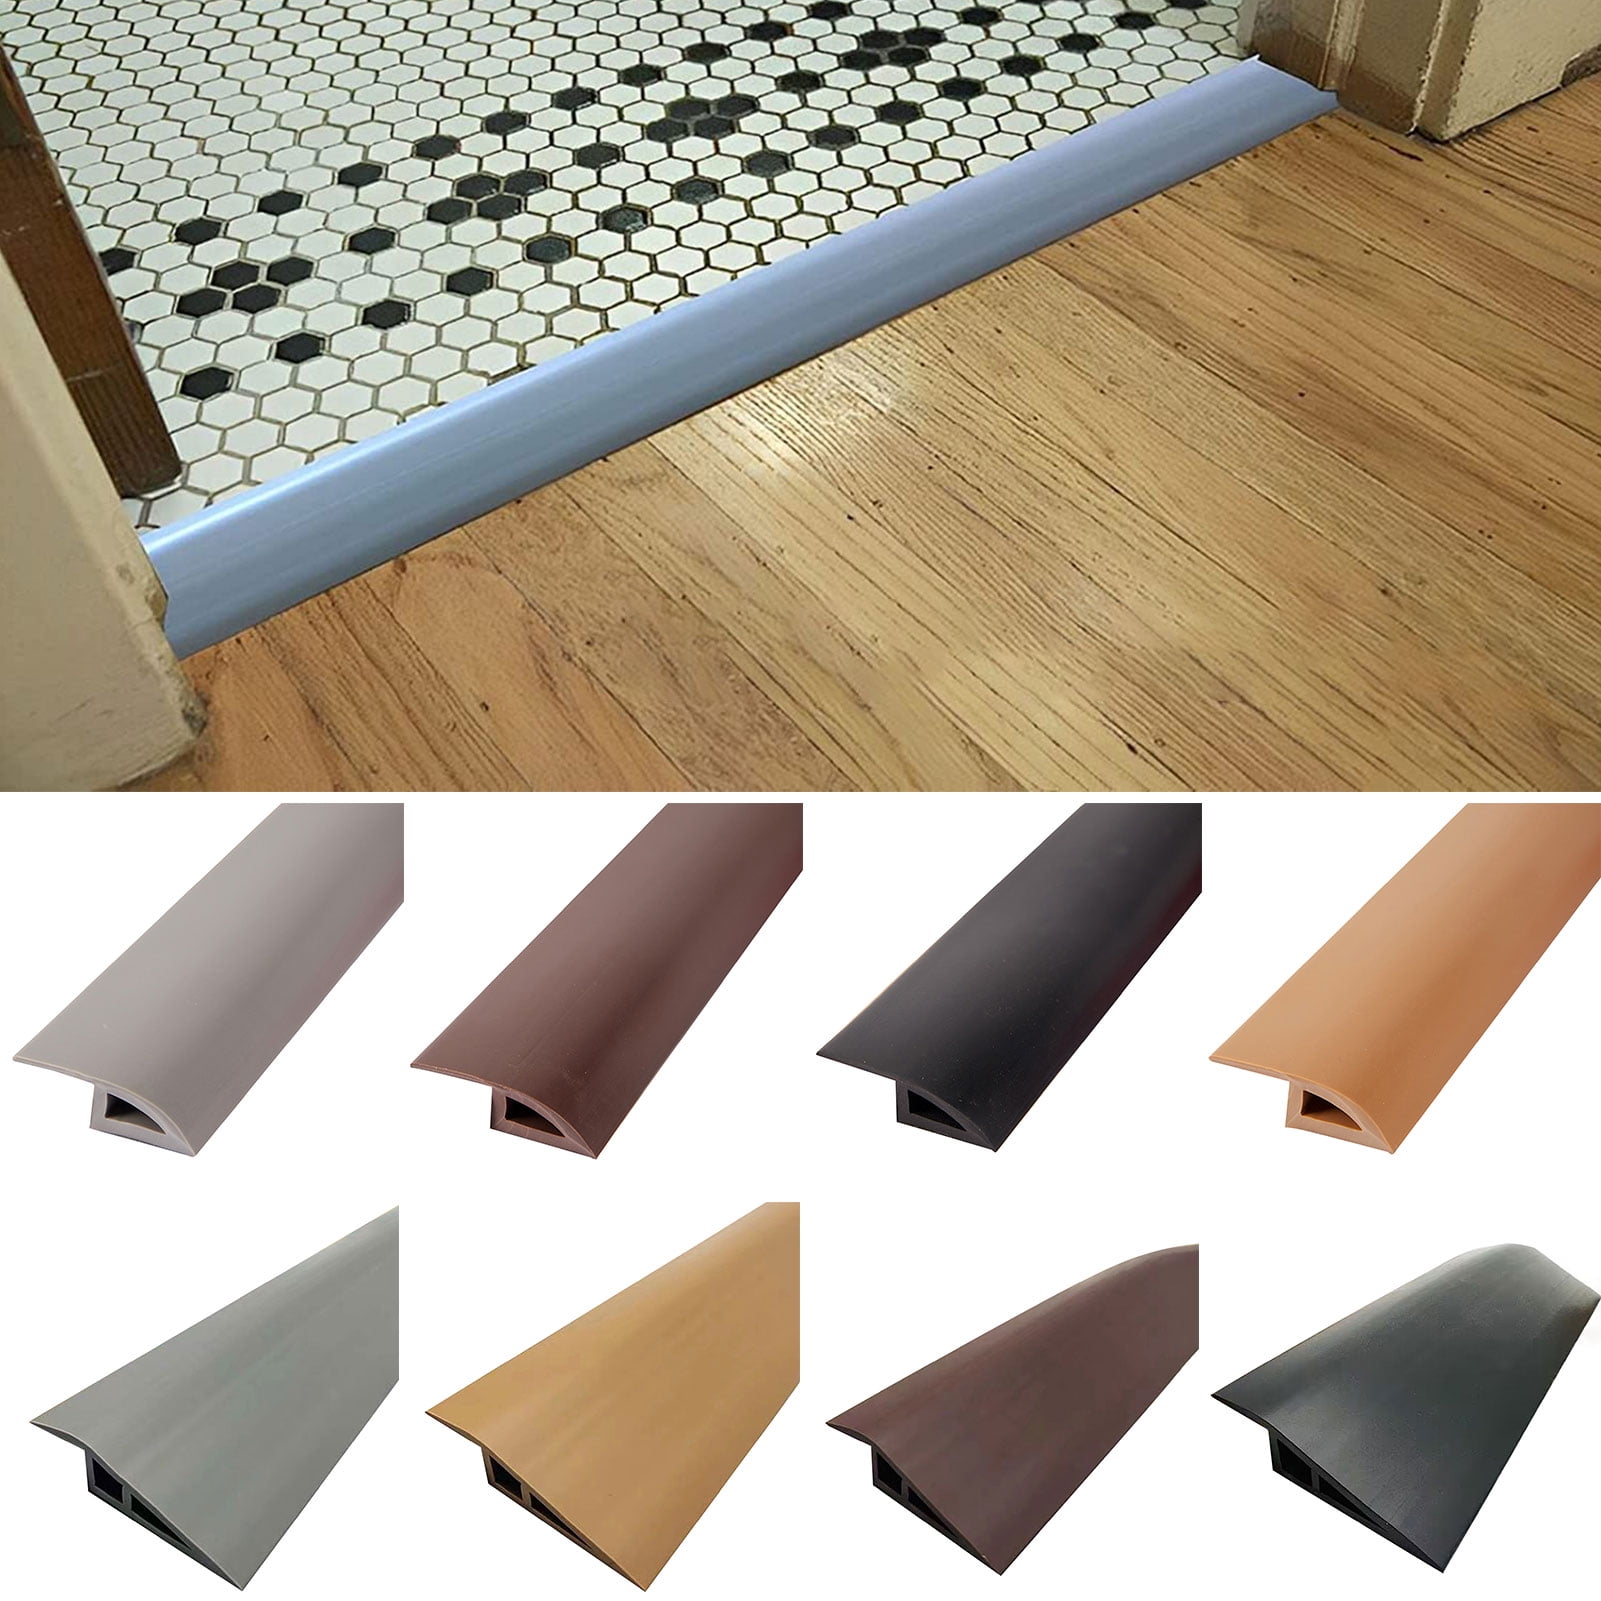 Fairnull 10 15mm Floor Transition Strip Self Adhesive Waterproof Pvc Cuttable Wear Resistant Sealing Universal Carpet To Tile Doorway Threshold Home Supplies Com